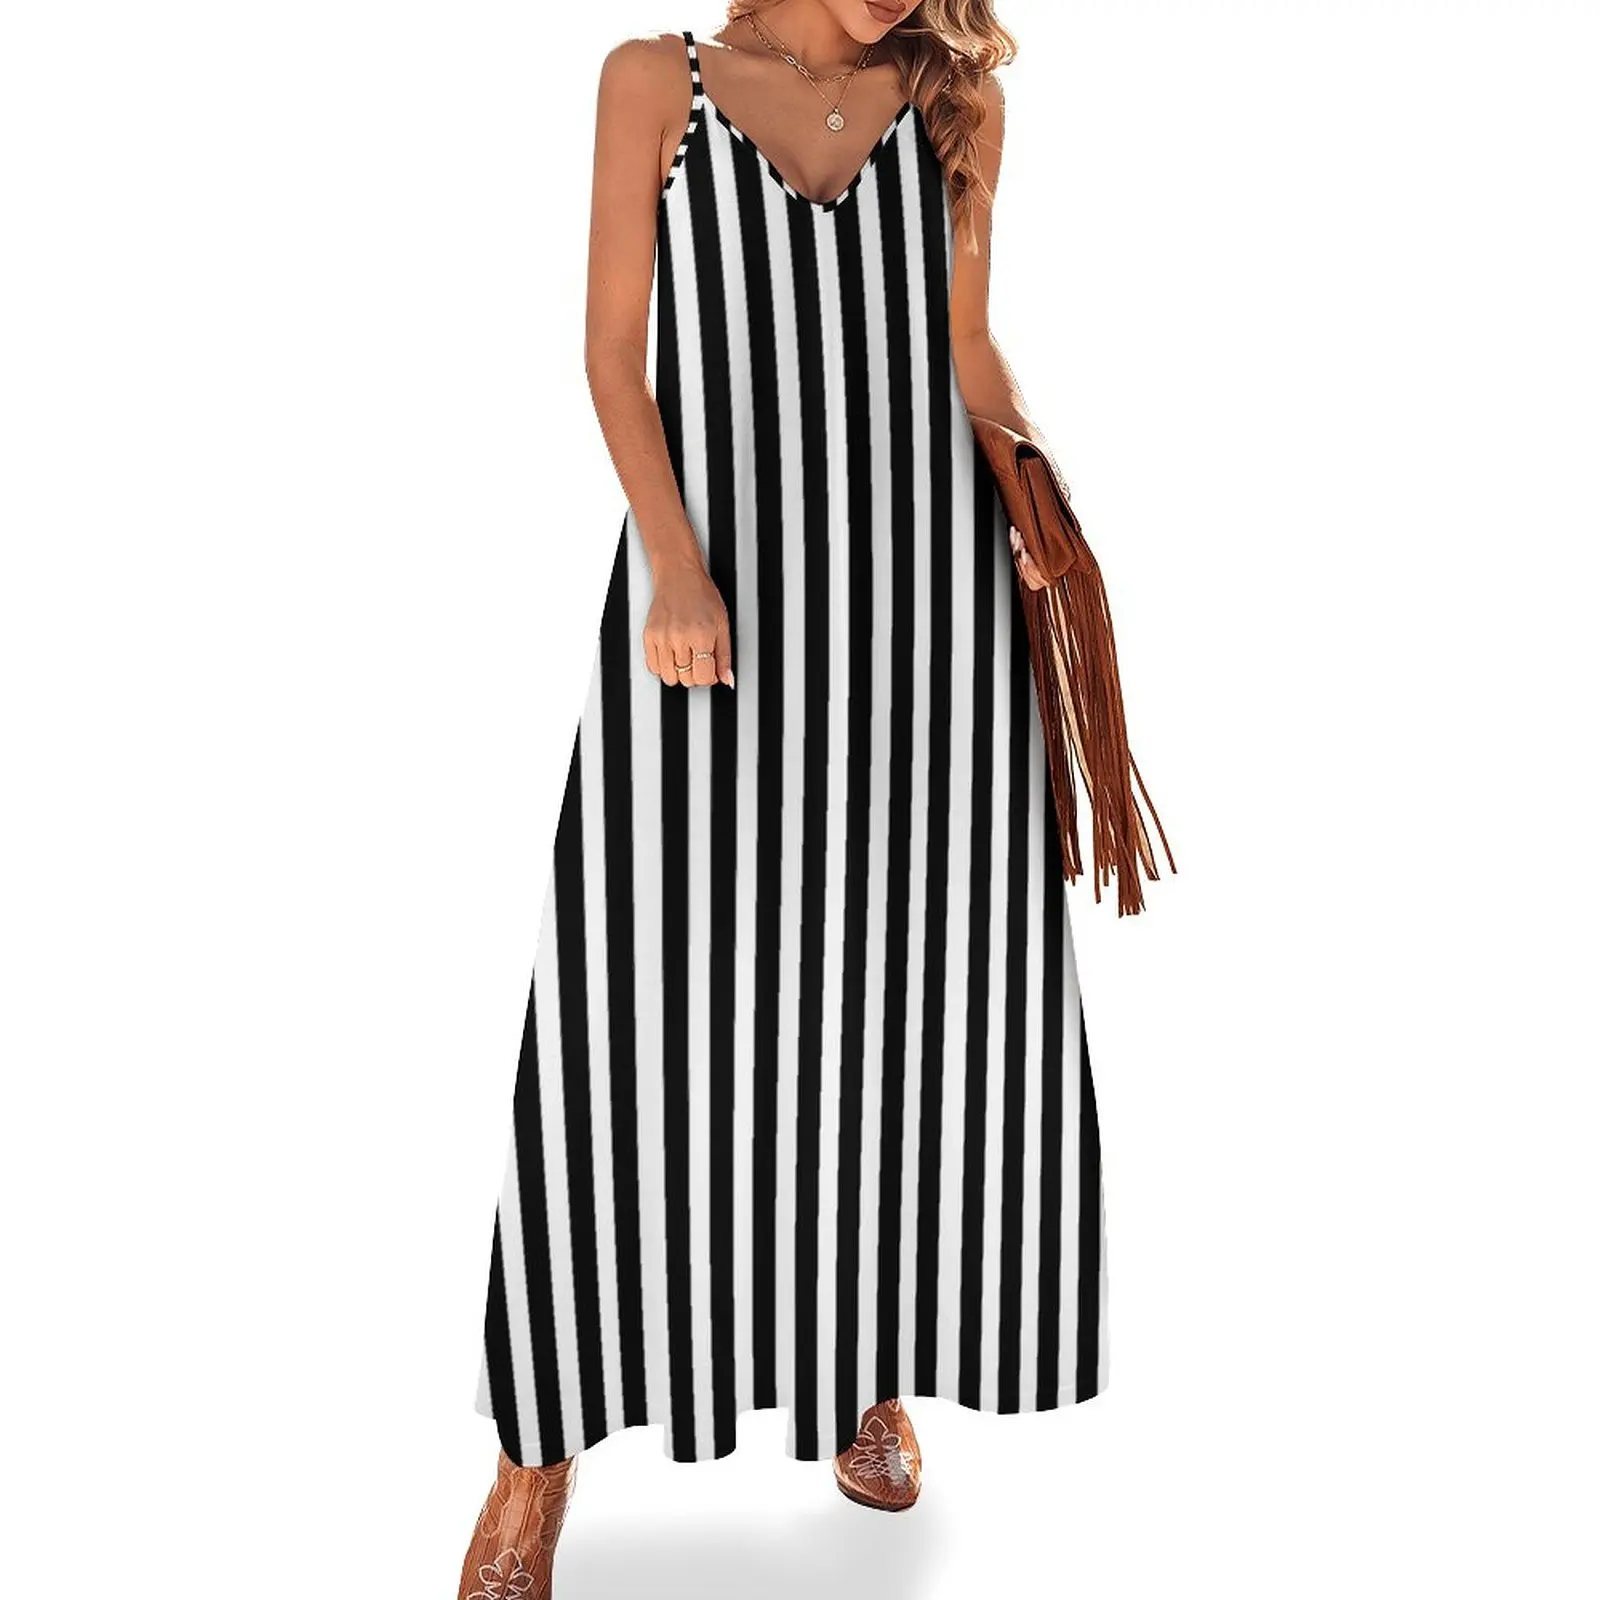 

Referee Zebra Stripes Sleeveless Dress sensual sexy dress for women elegant chic women dresses promotion Women's summer dresses